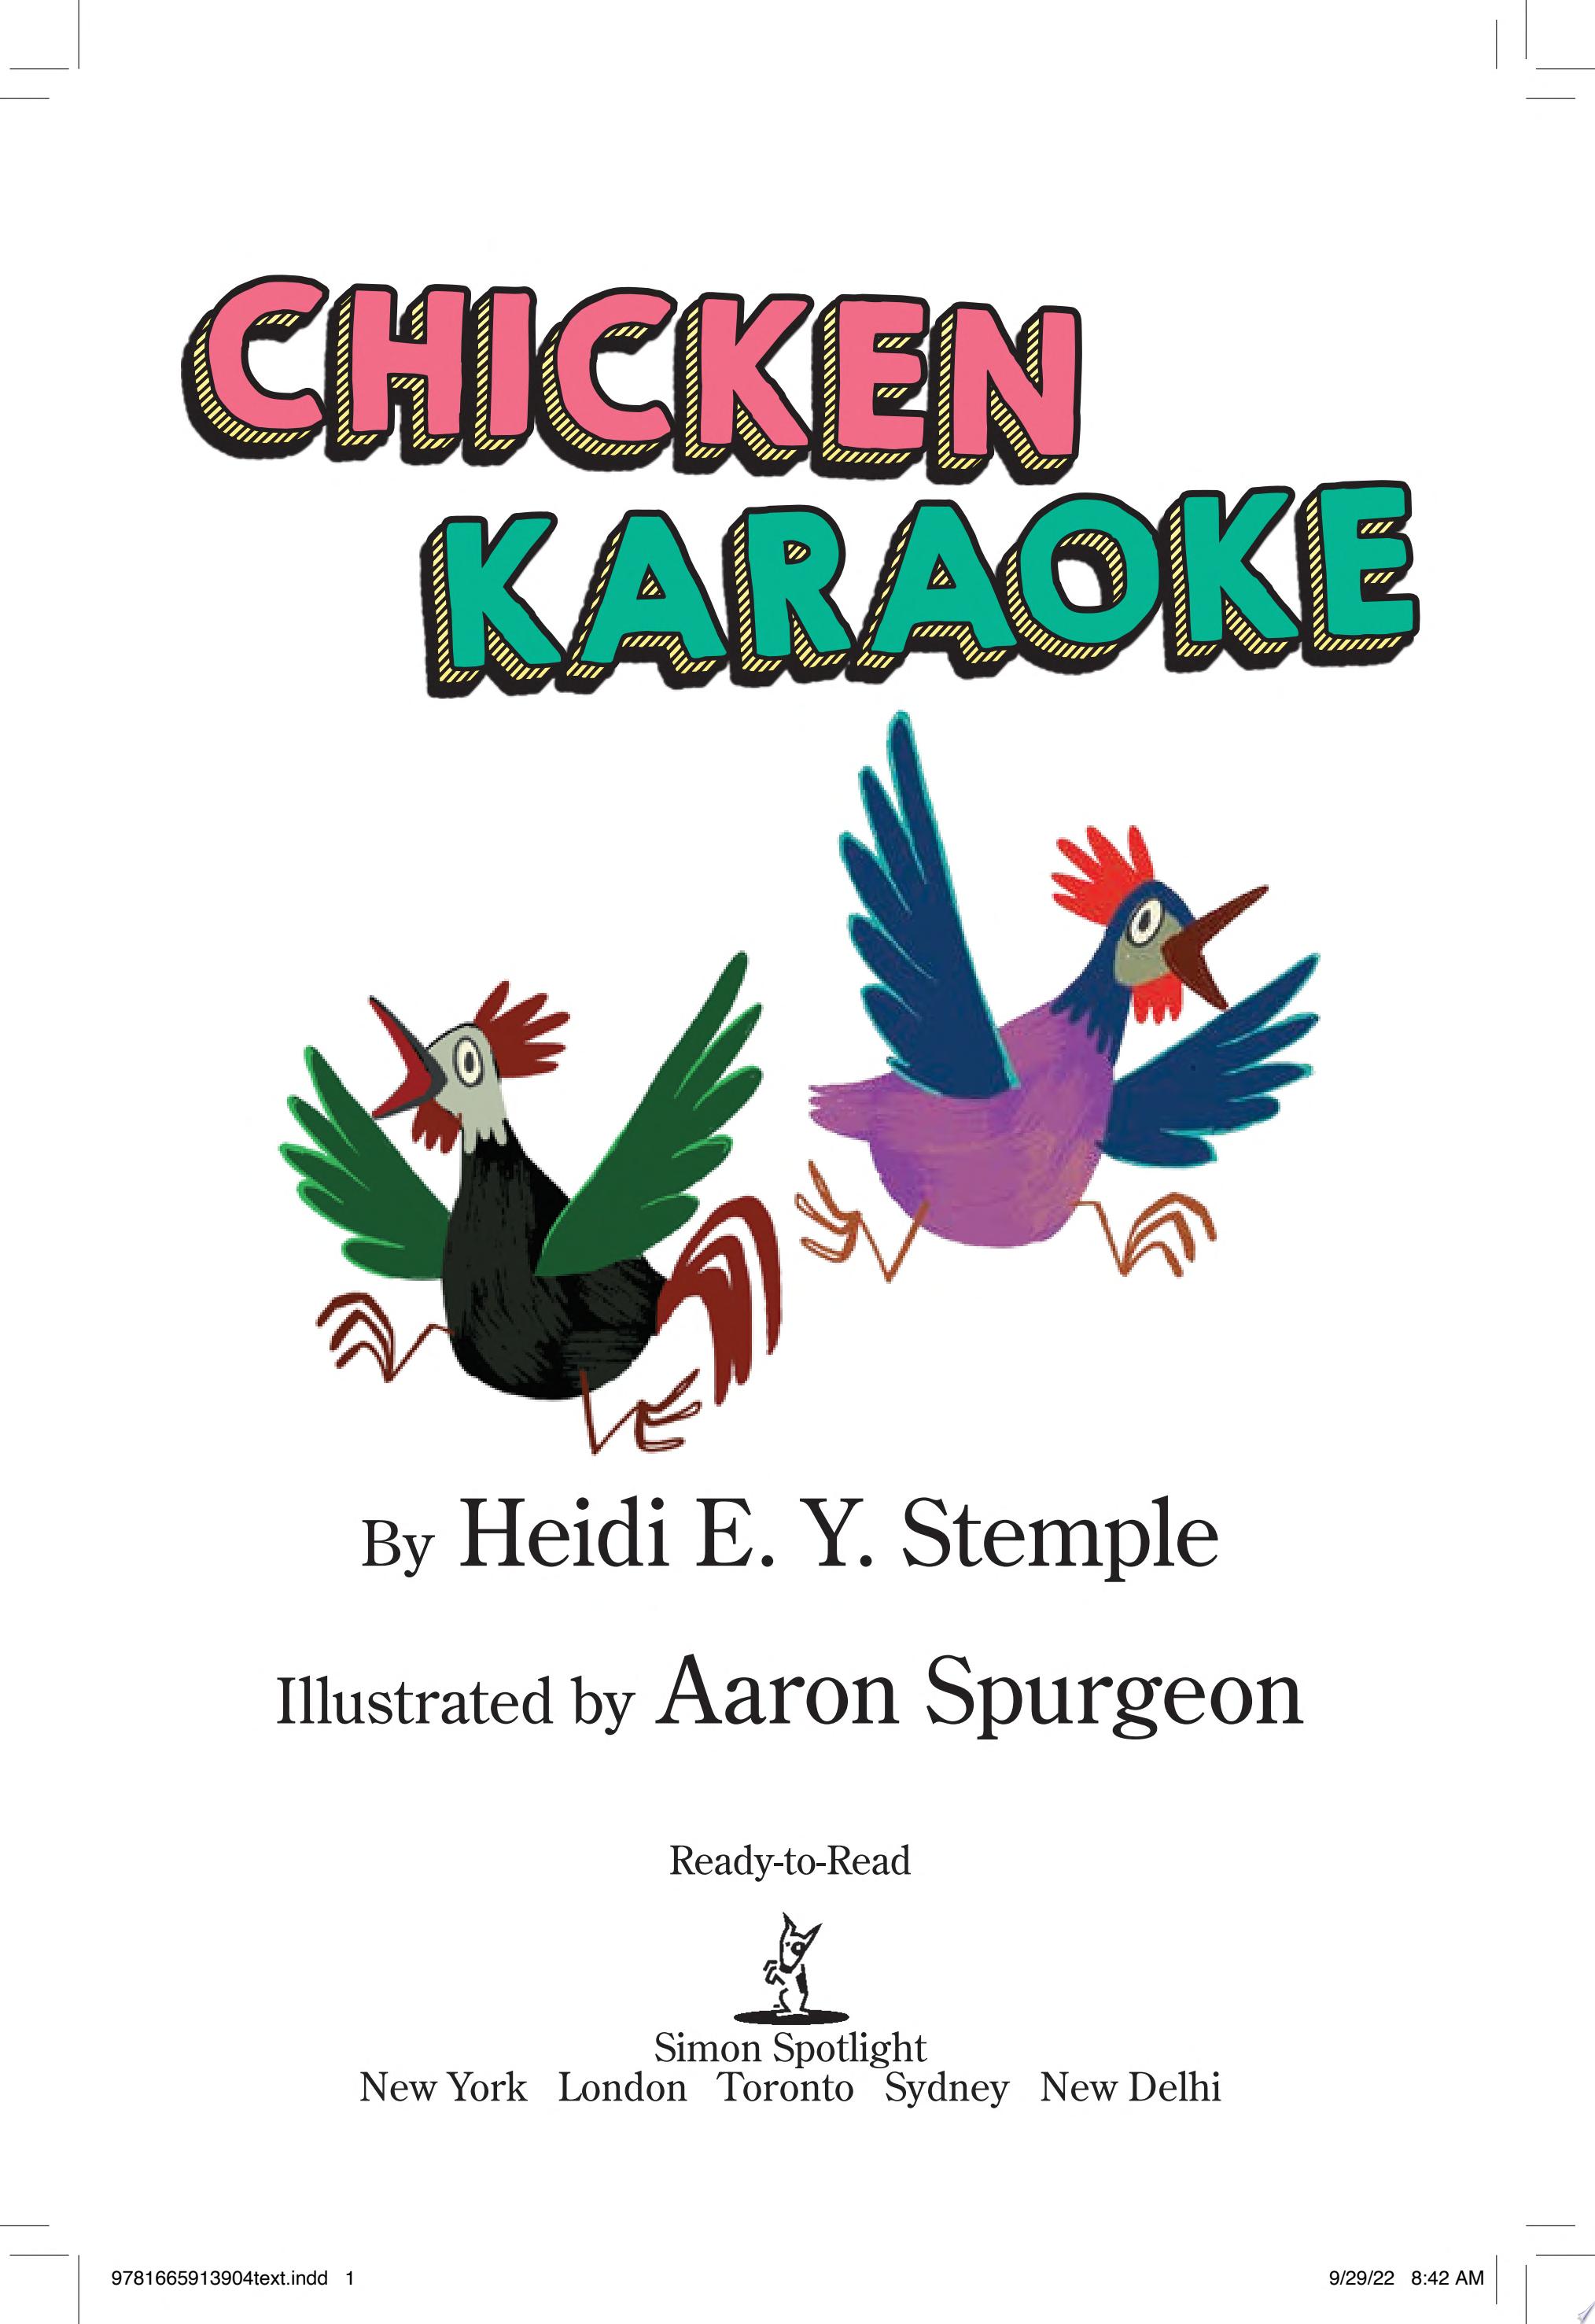 Image for "Chicken Karaoke"